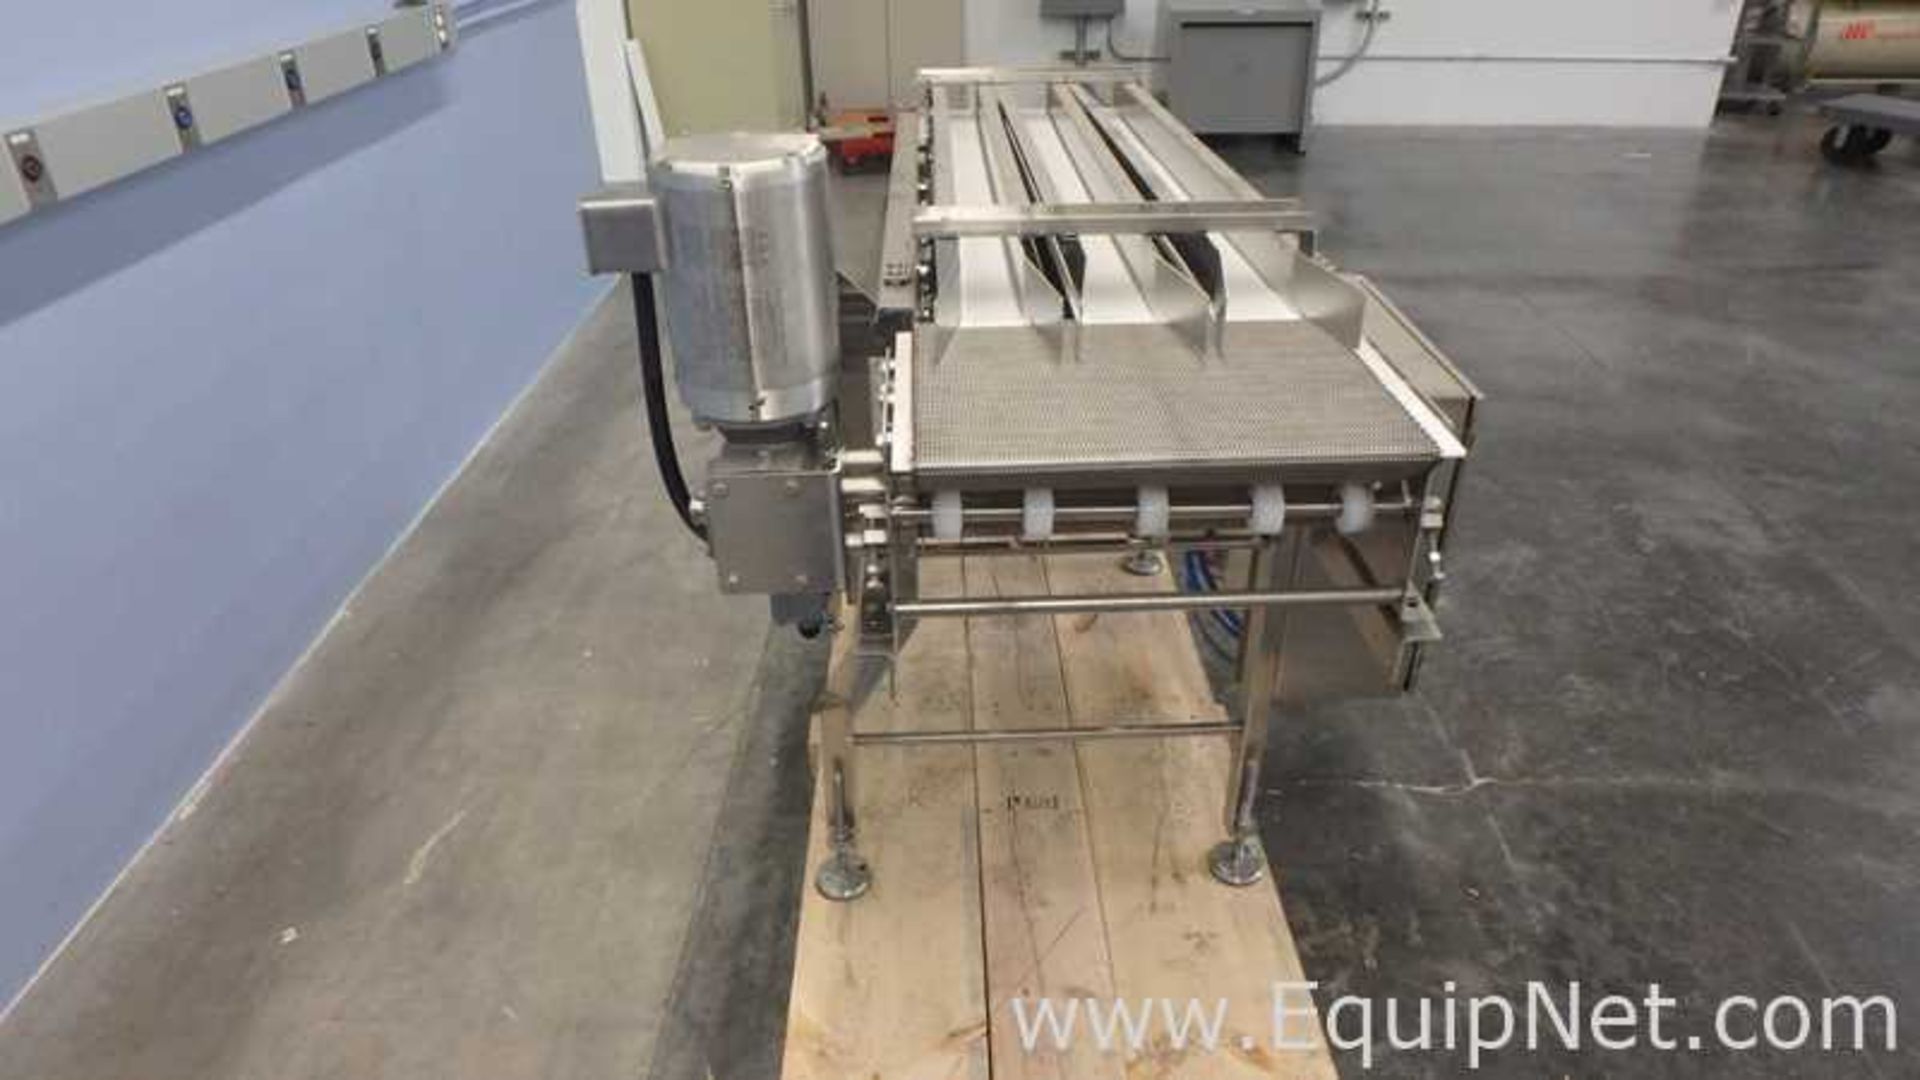 KleenLine Engineered Stainless Steel Conveyor Designed for Full Washdown - Image 23 of 30